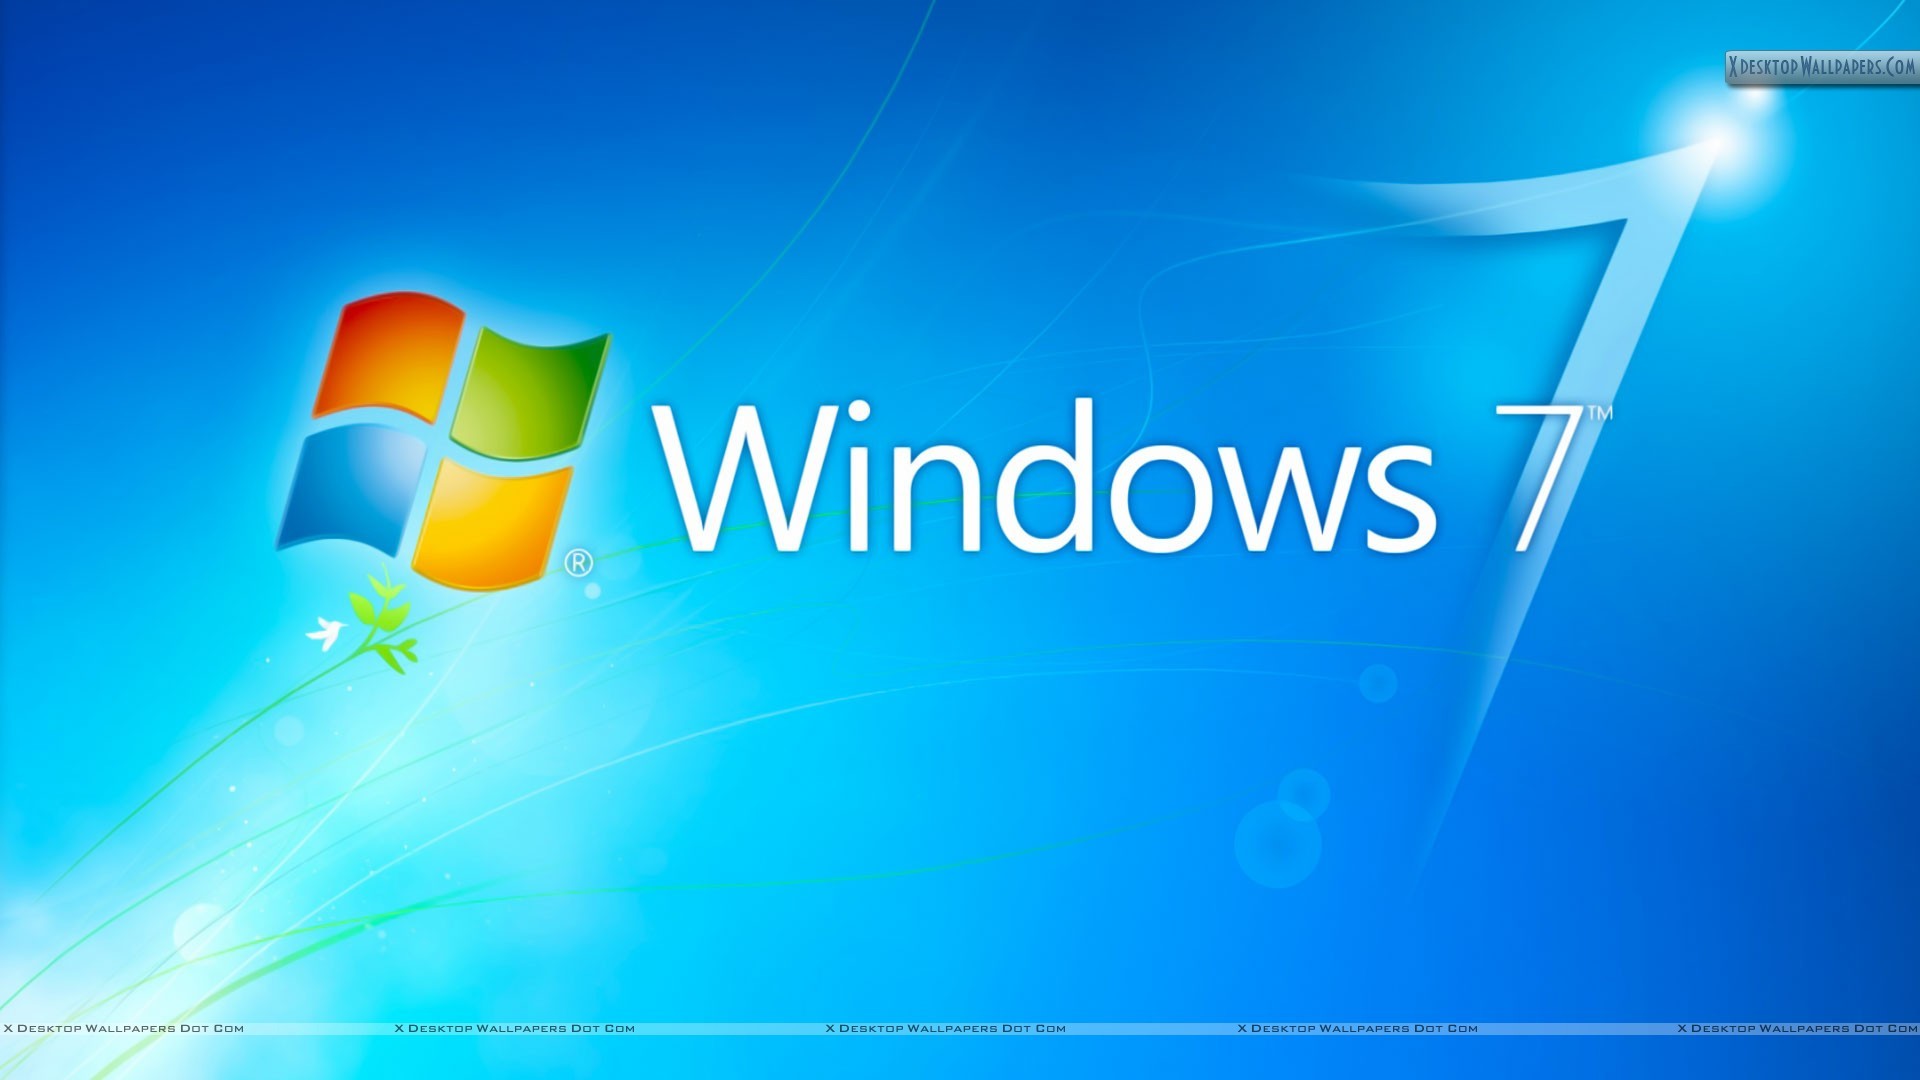 Papel De Parede Windows 7 4k - imagens legais para papel de parede
